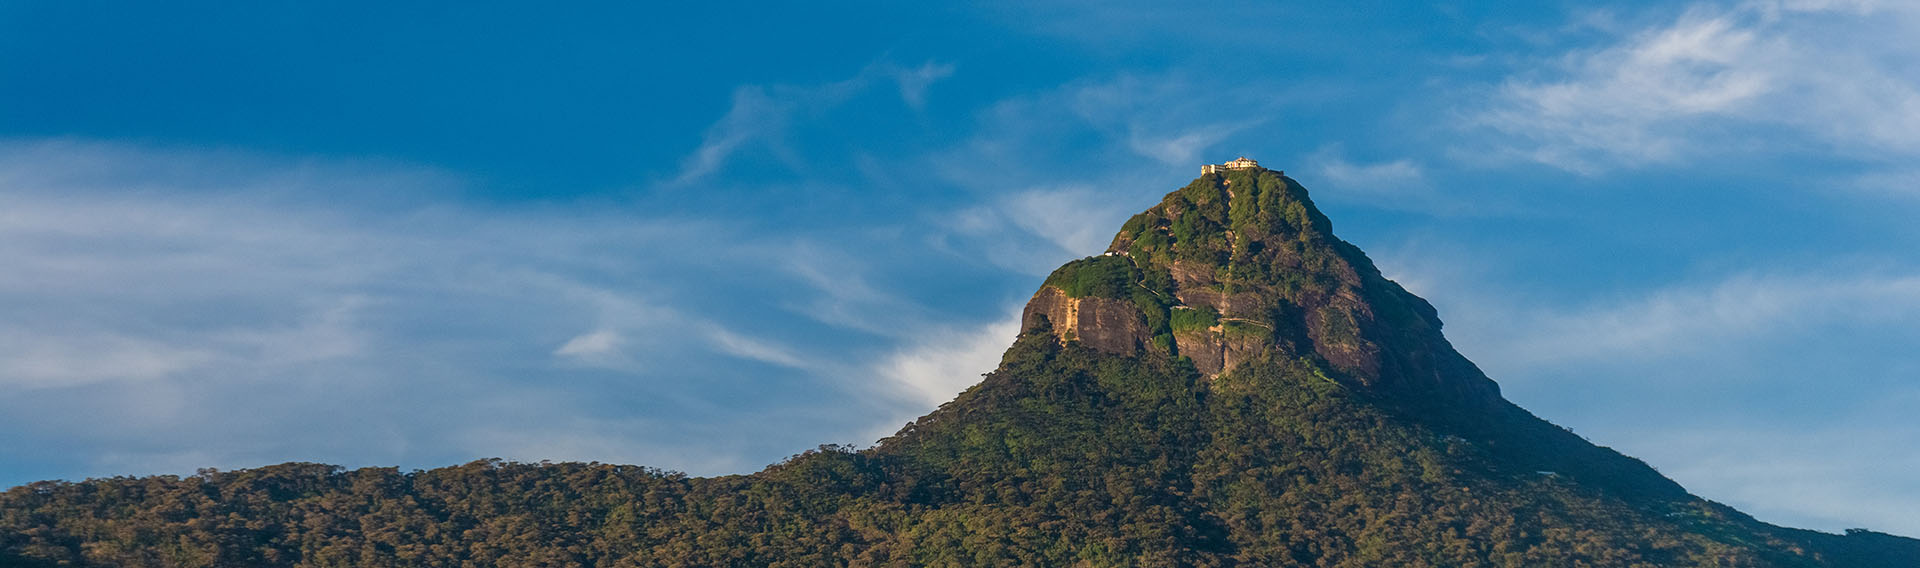 Sri Lanka, Adam's Peak